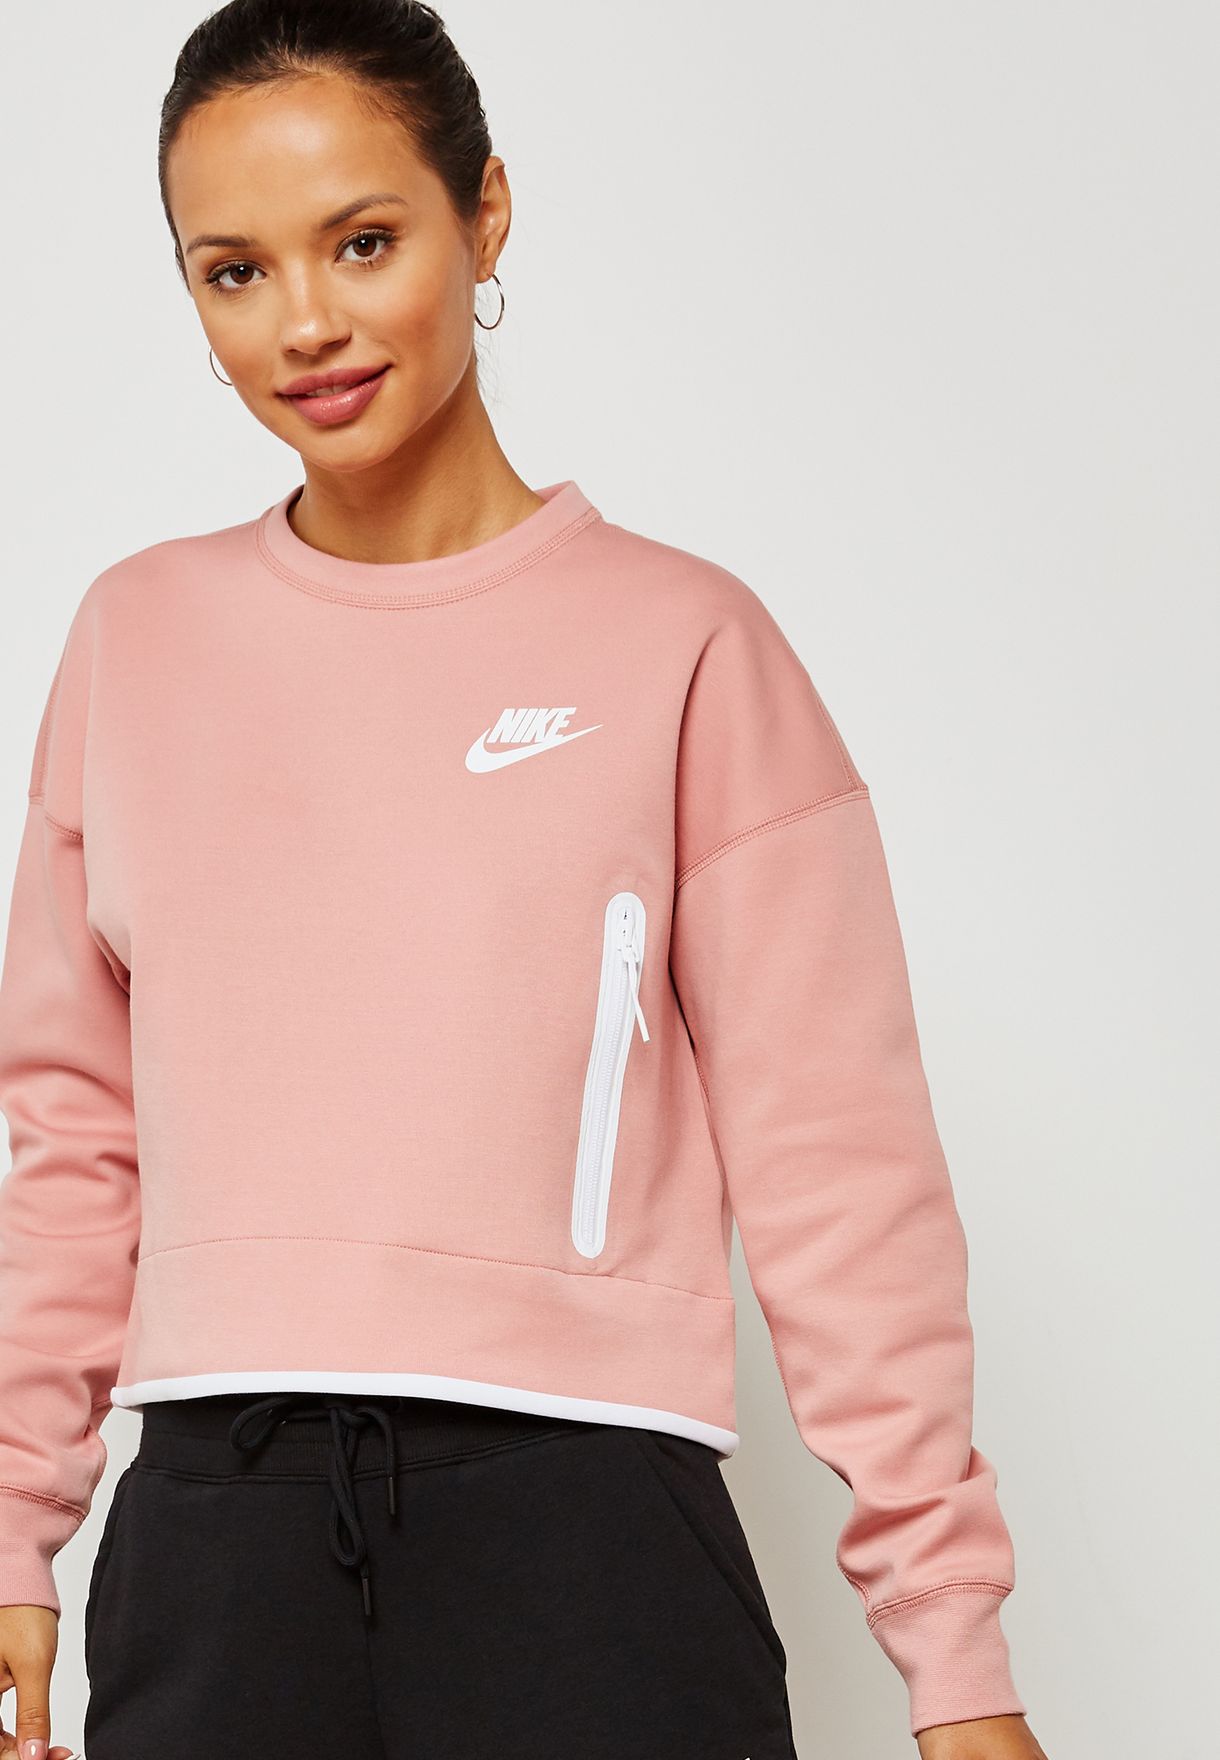 nike women's pink sweatshirt